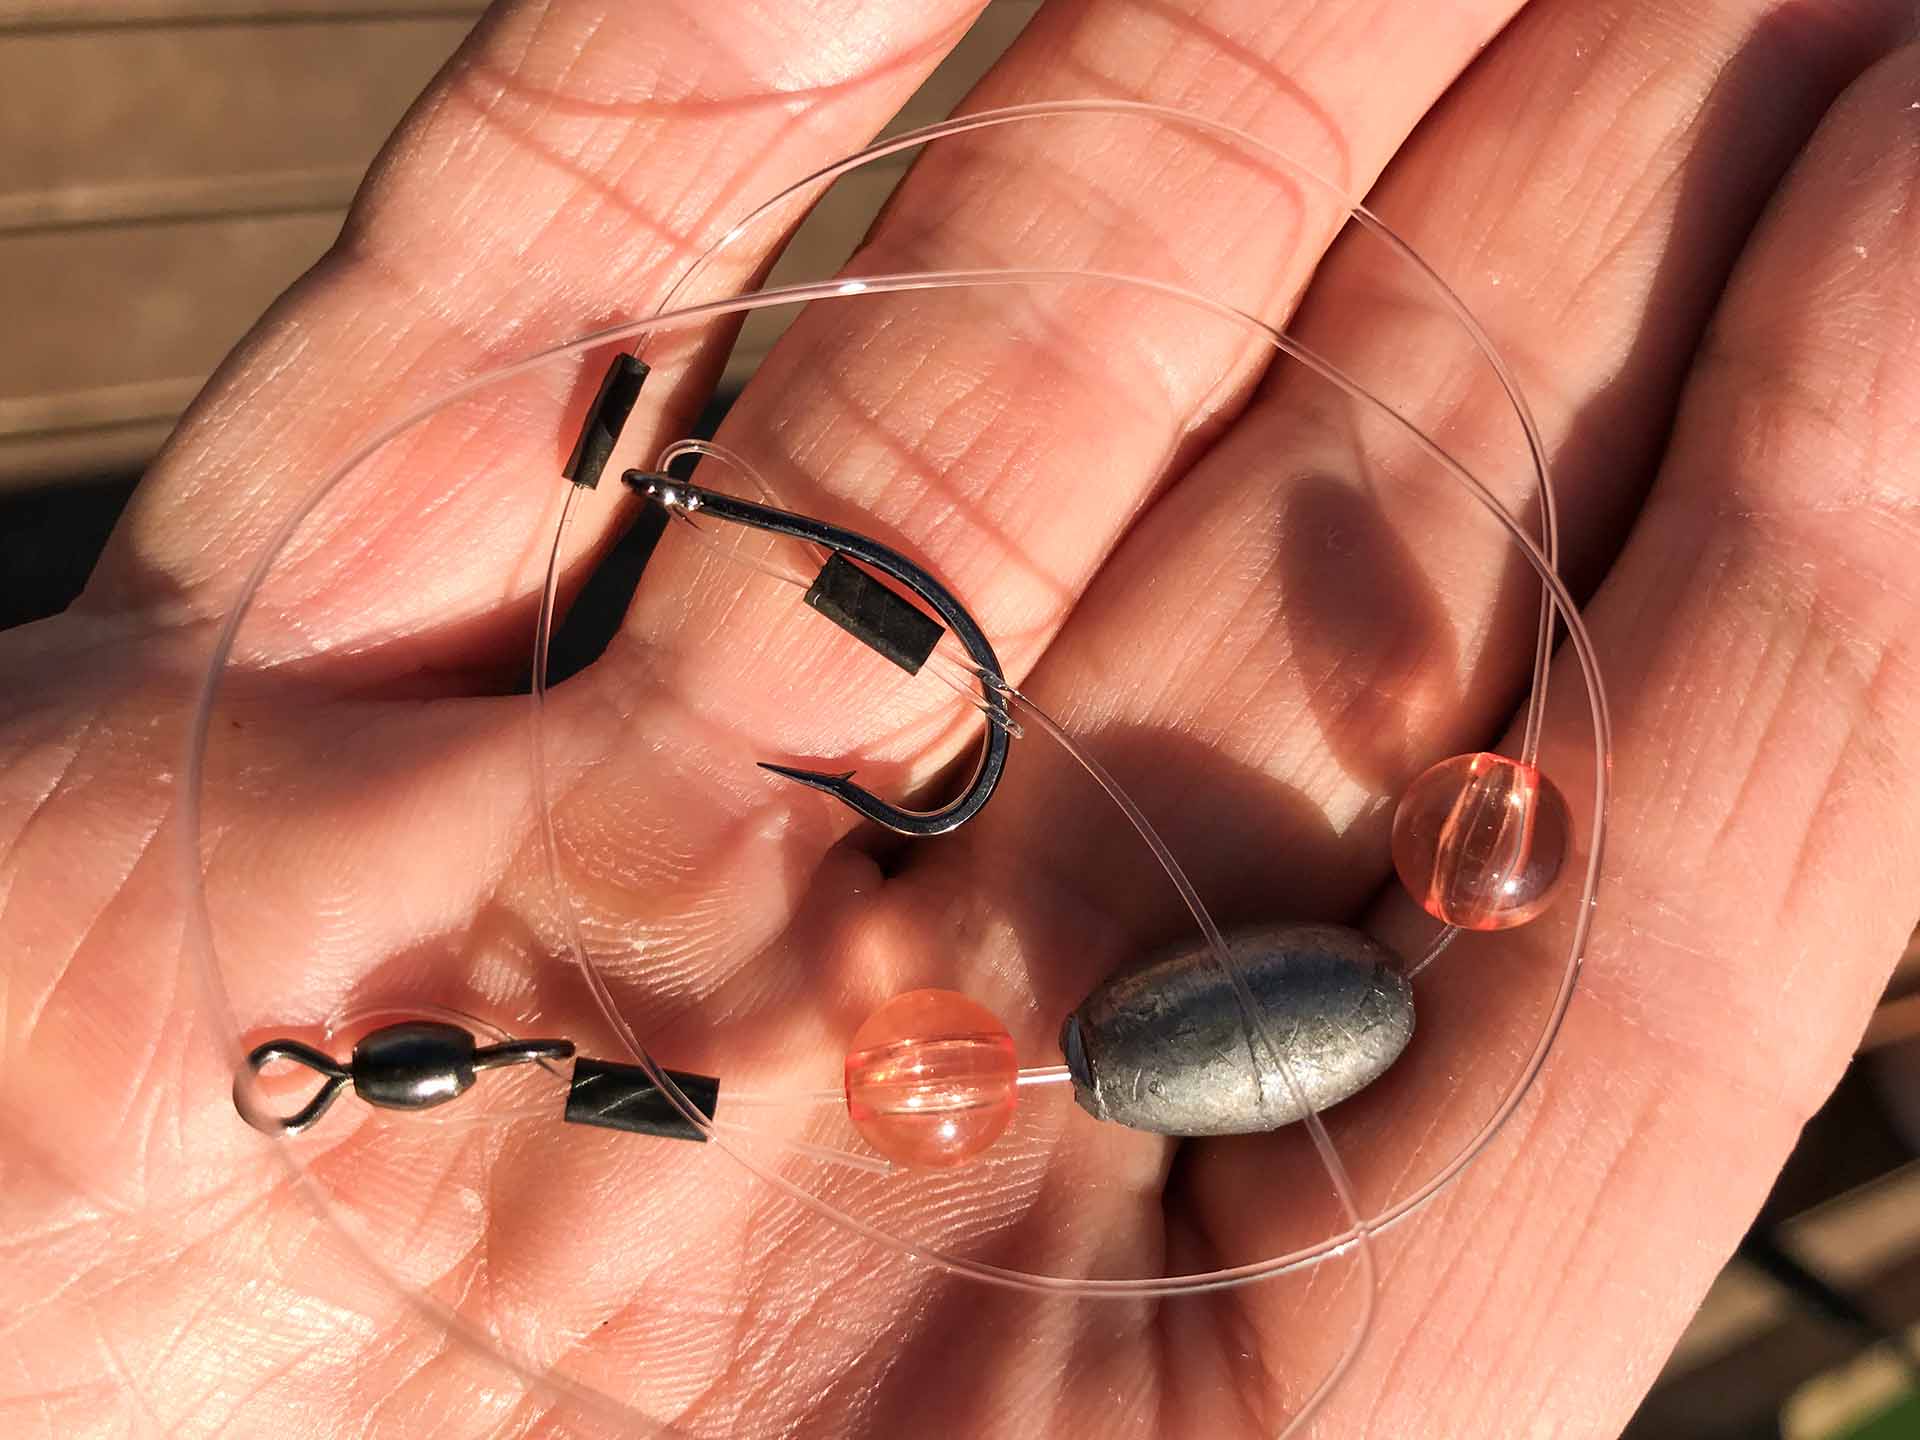 Carolina fish rig on a person's palm